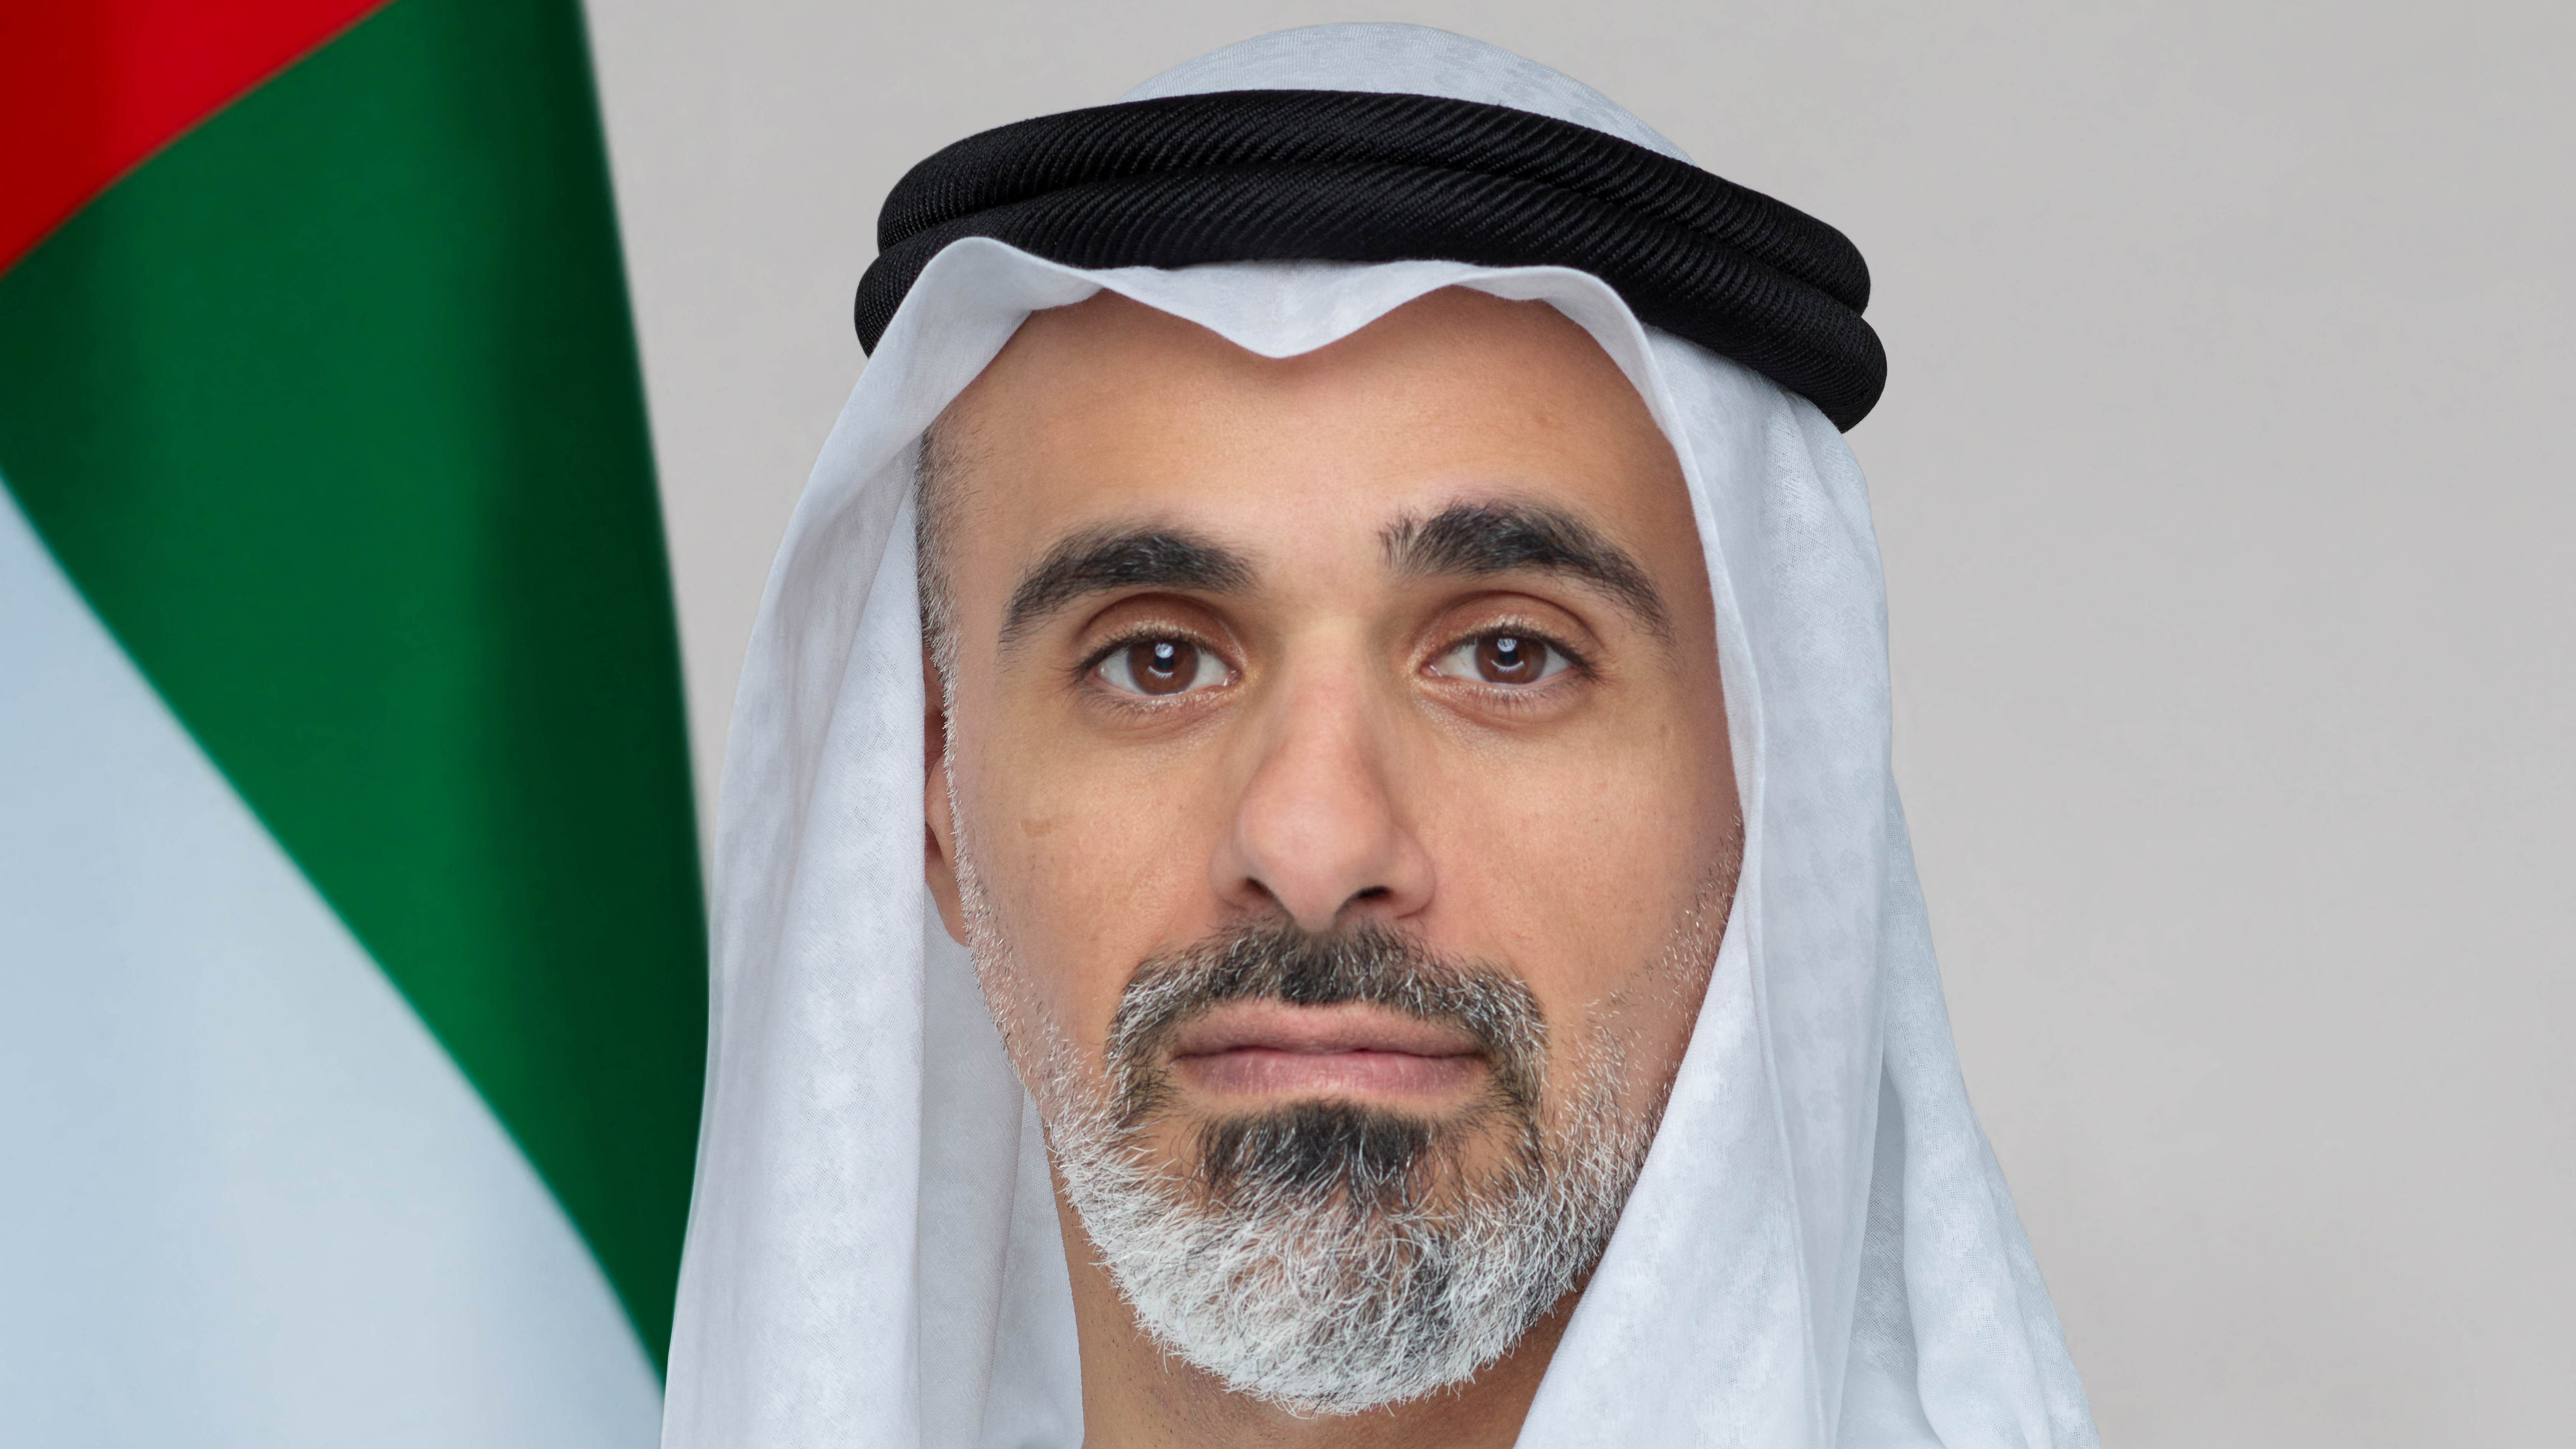 HH Sheikh Khaled bin Mohamed bin Zayed Al Nahyan, Crown Prince of Abu Dhabi. Credit: Reuters Photo